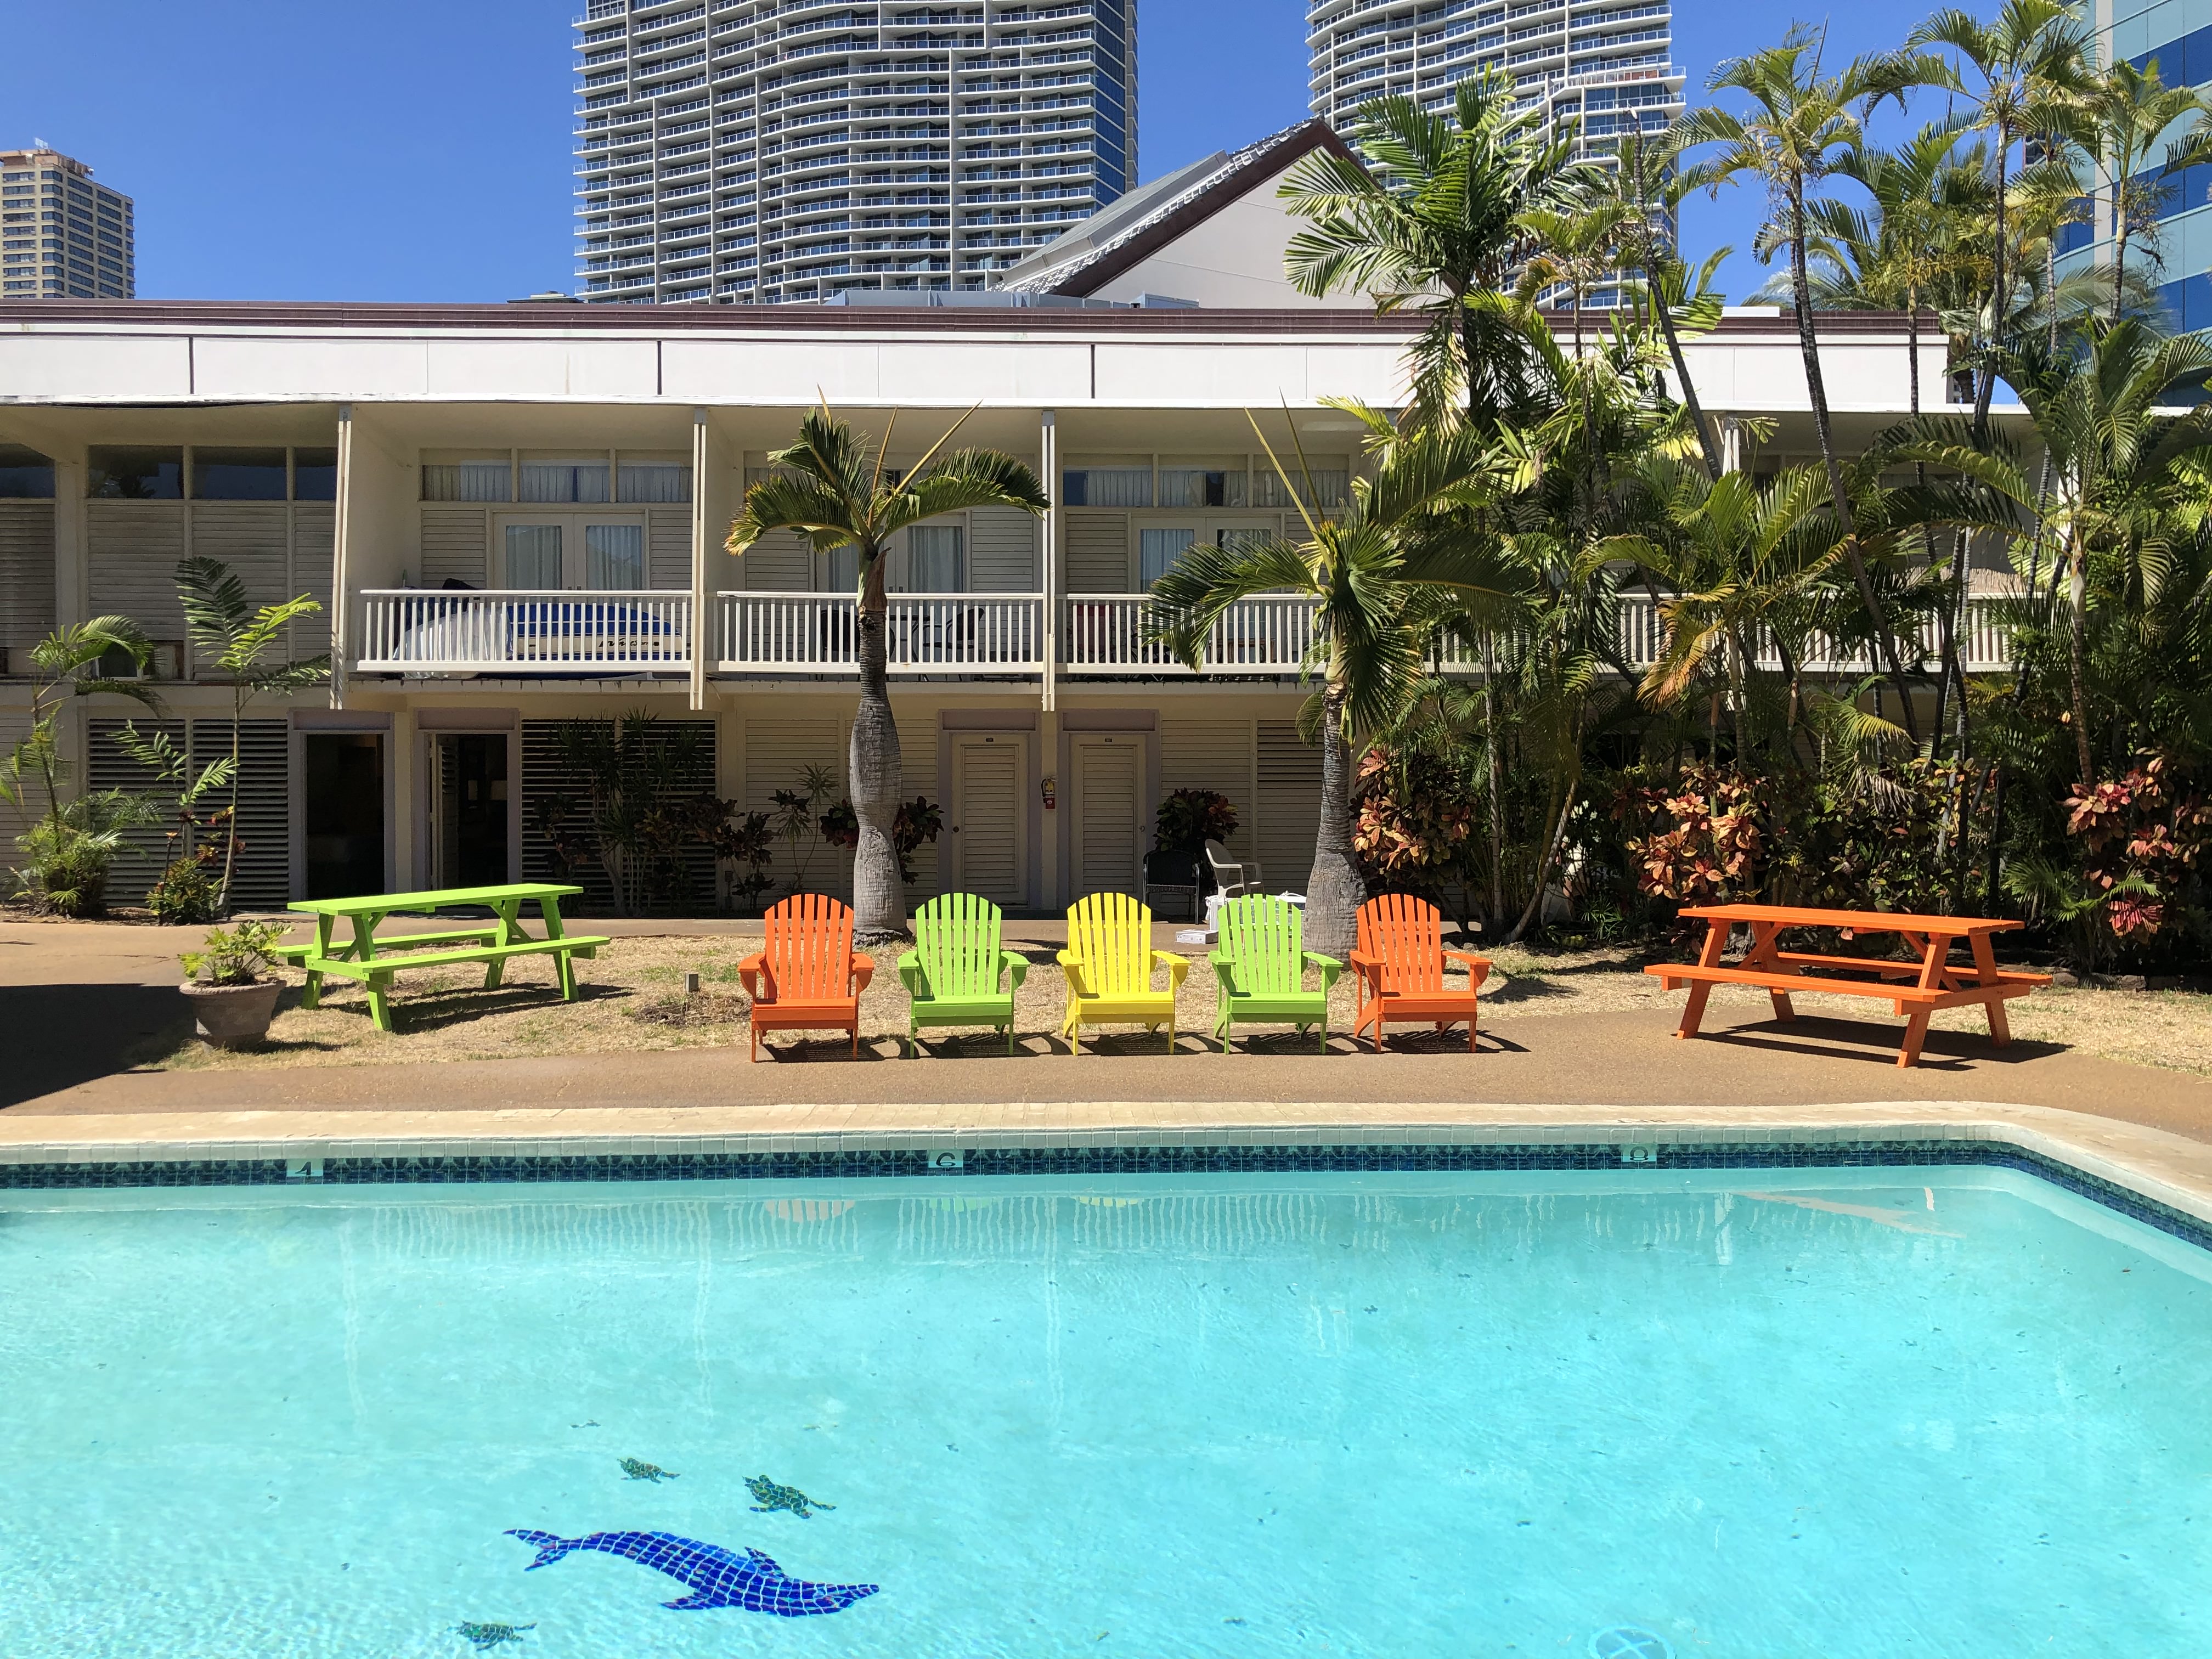 A view of Pagoda Waikiki's outdoor pool